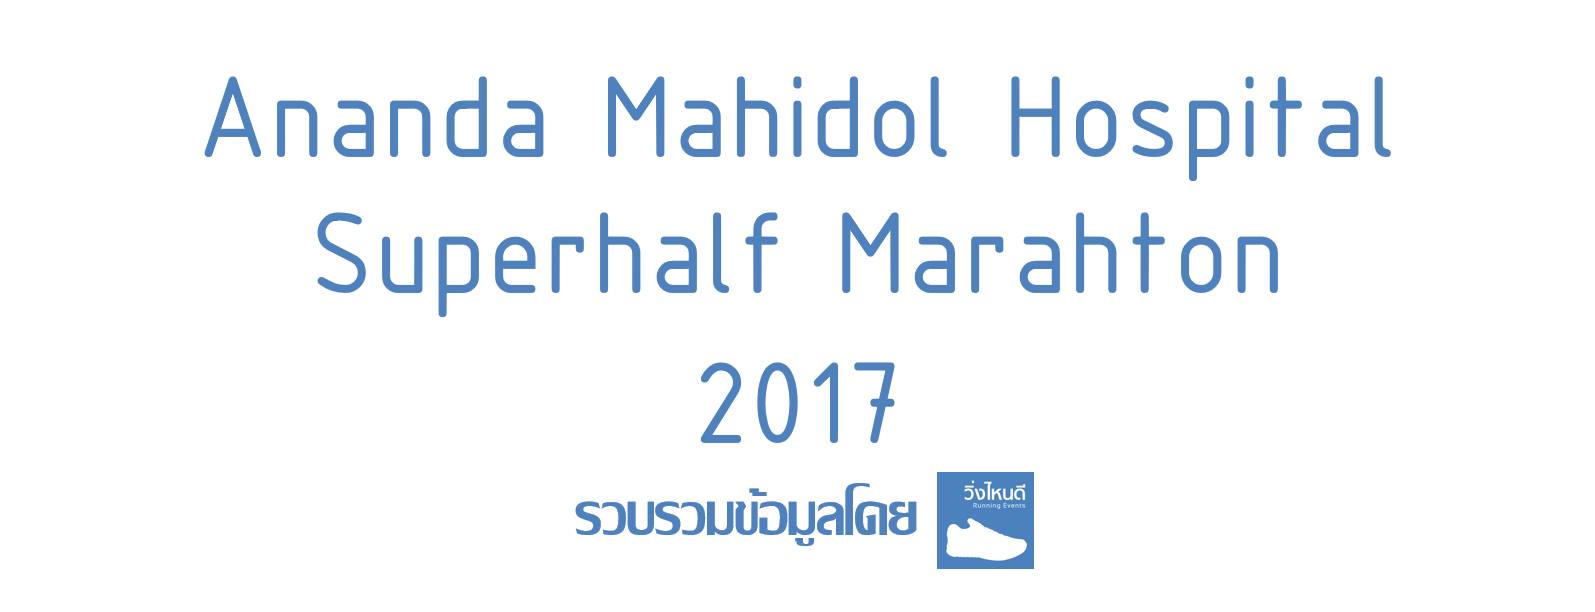 Ananda Mahidol Hospital Superhalf Marahton 2017